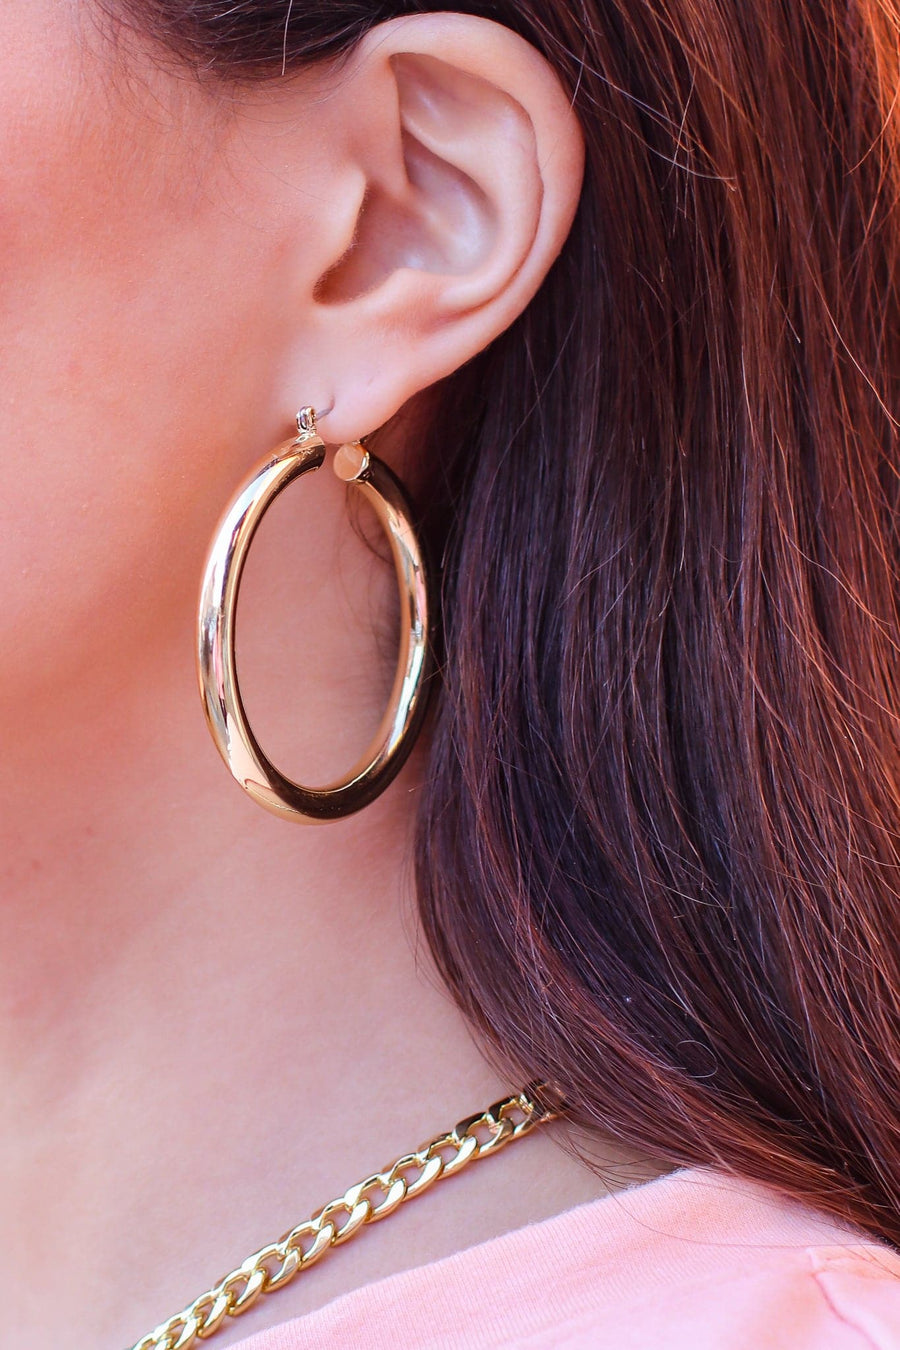 Gold So Into It Hoop Earrings - kitchencabinetmagic